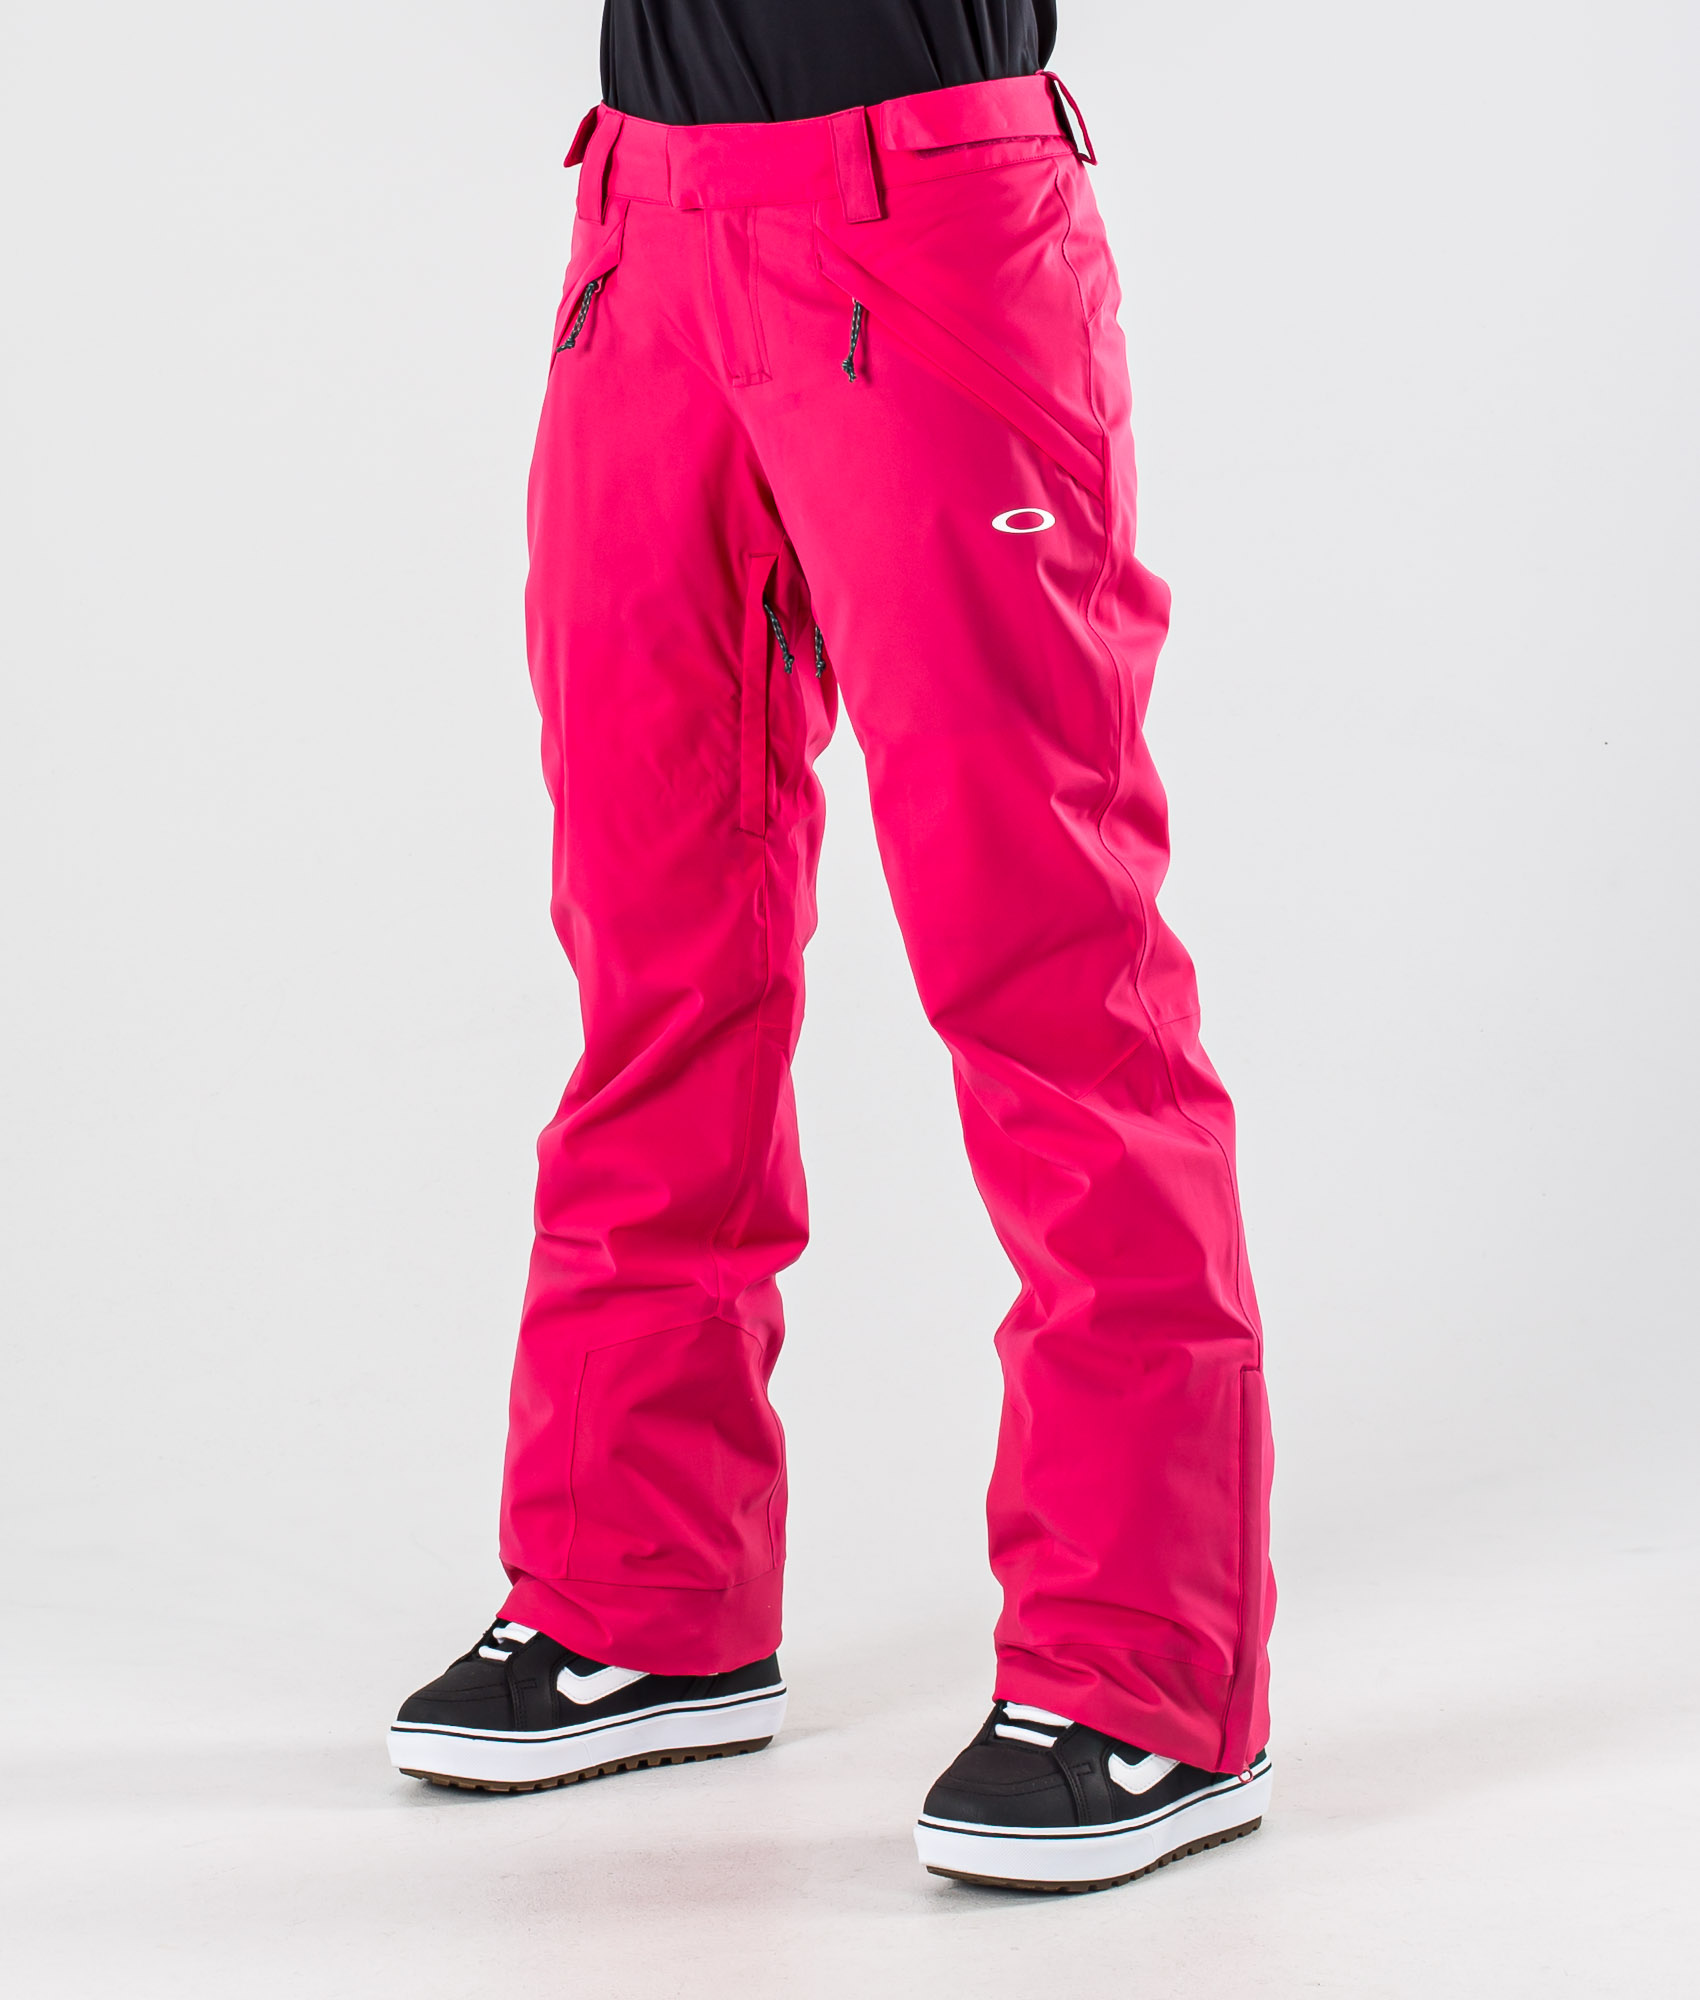 oakley ski pants womens